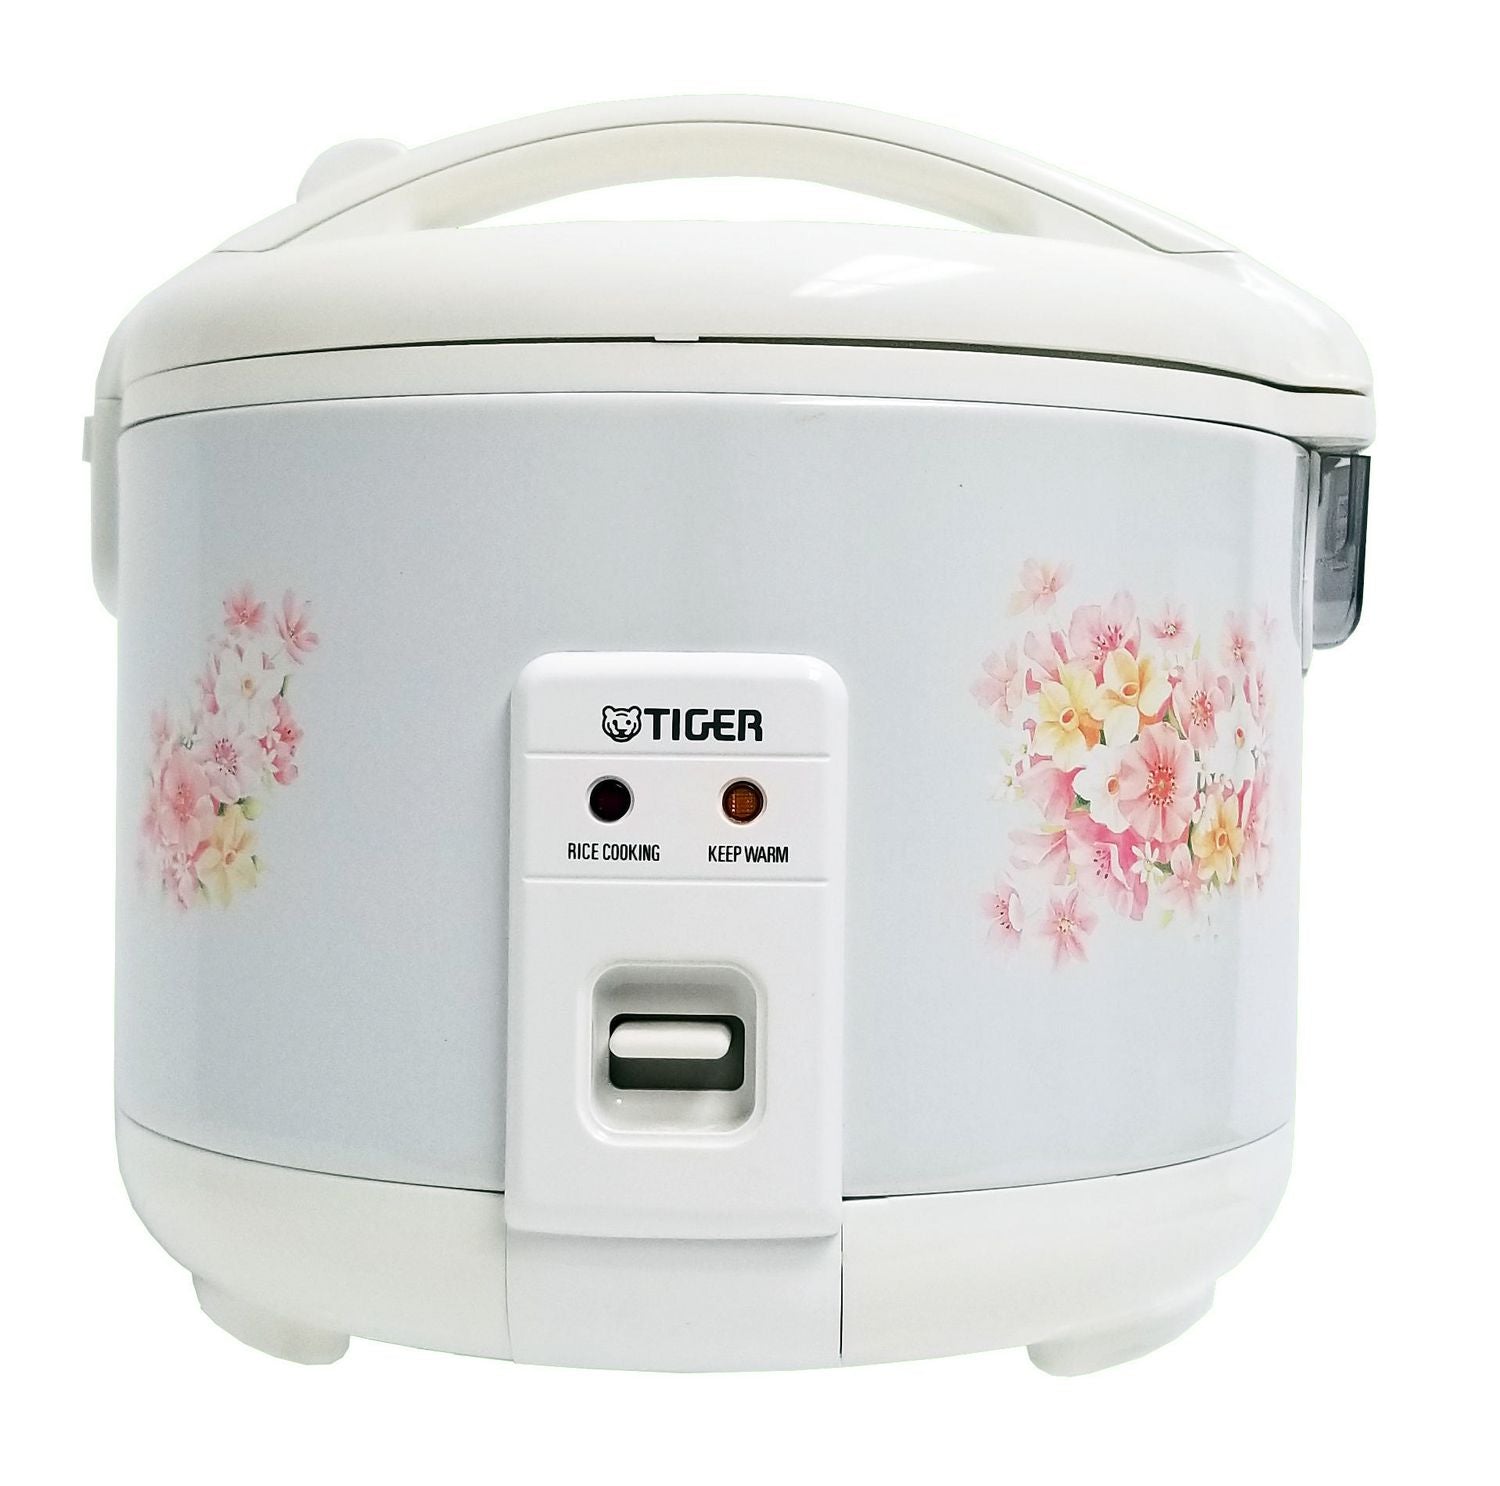 Tiger Electronics Jnps-55u 3 Cup Rice Cooker